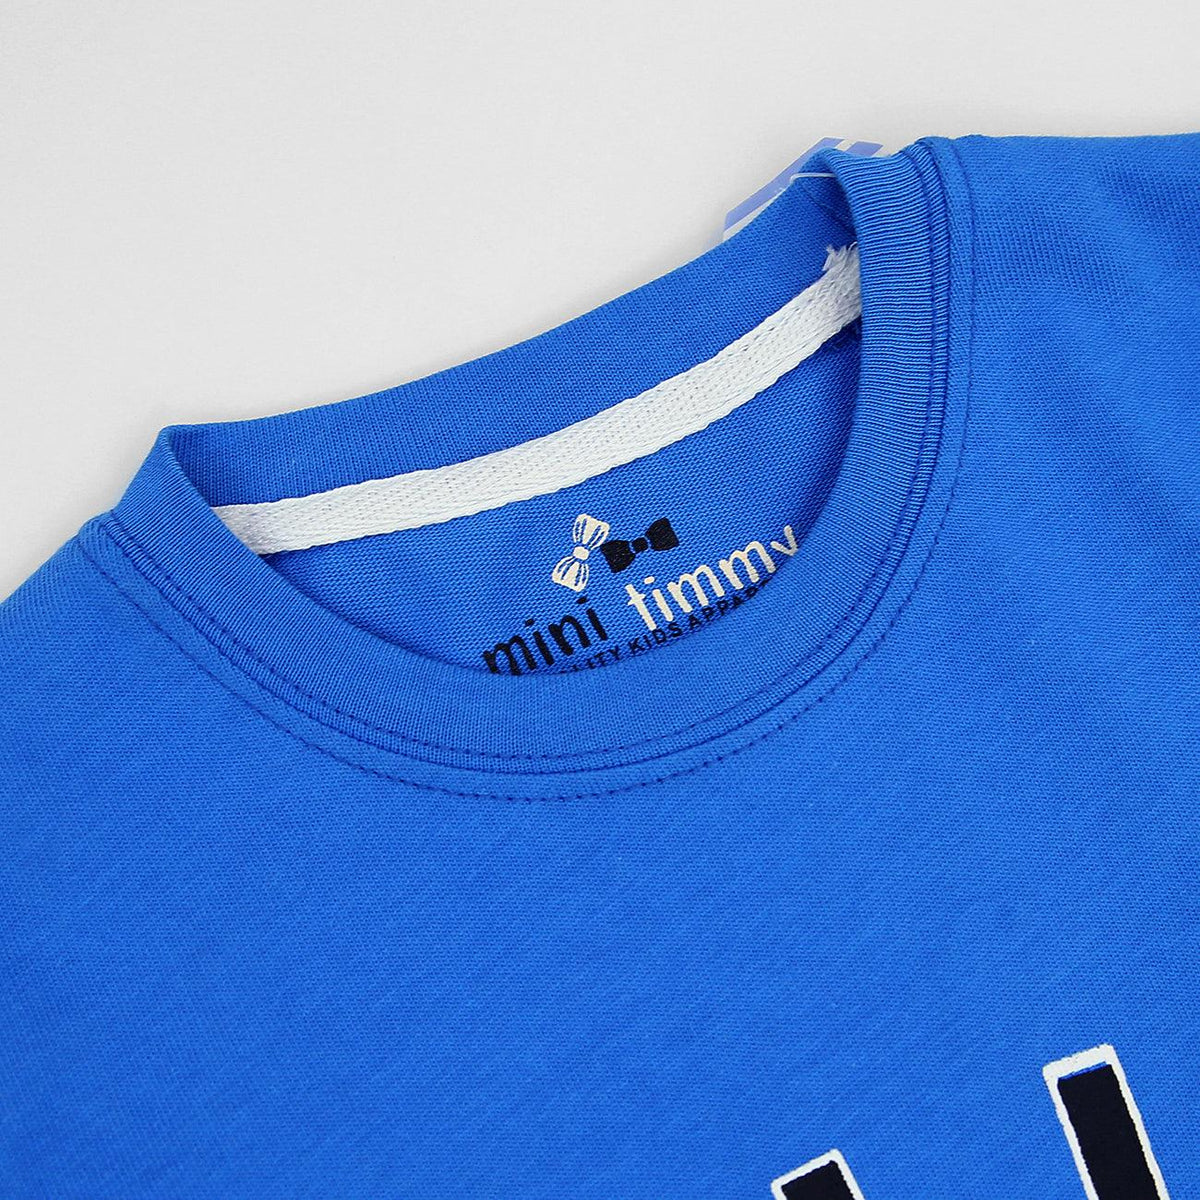 Boys Soft Cotton Printed T-Shirt 9 MONTH - 10 YRS (MI-11375) - Brands River